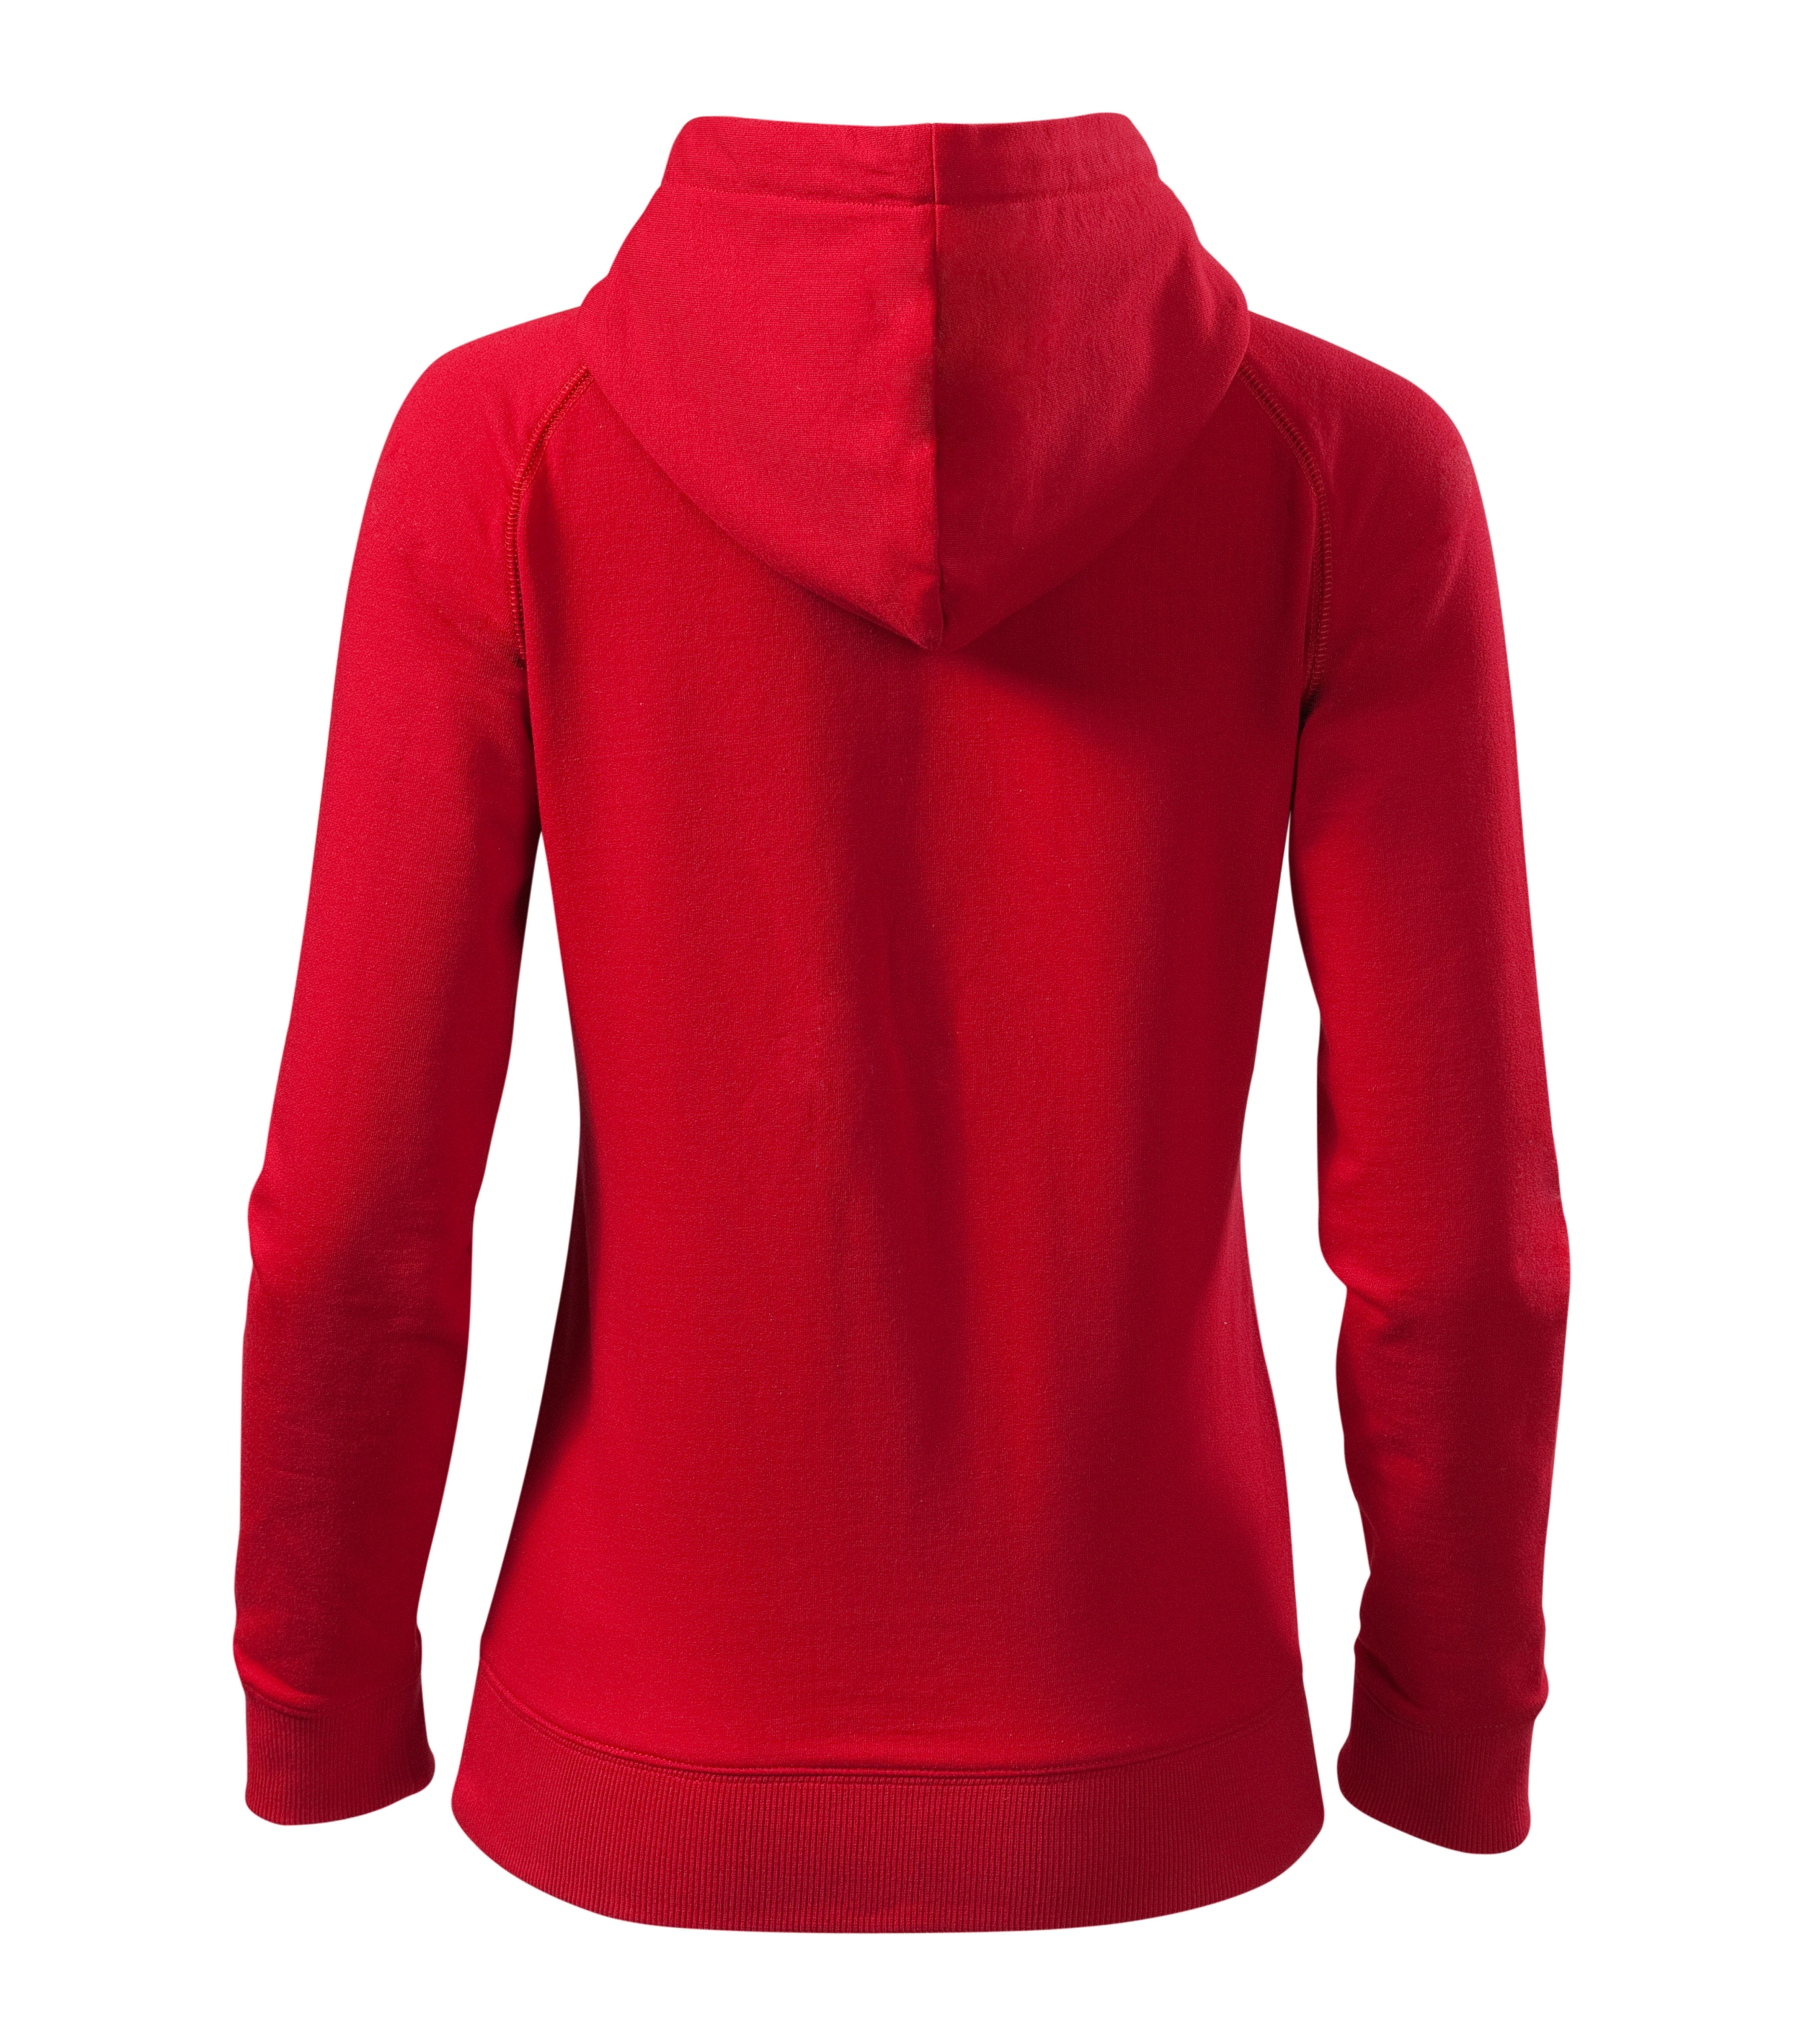 Voyage 451 Sweatshirt Damen Jacke Damen Sweatshirts für Bekleidung Sweatjacke Kapuzenjacke Sweatshirt Übergangsjacke